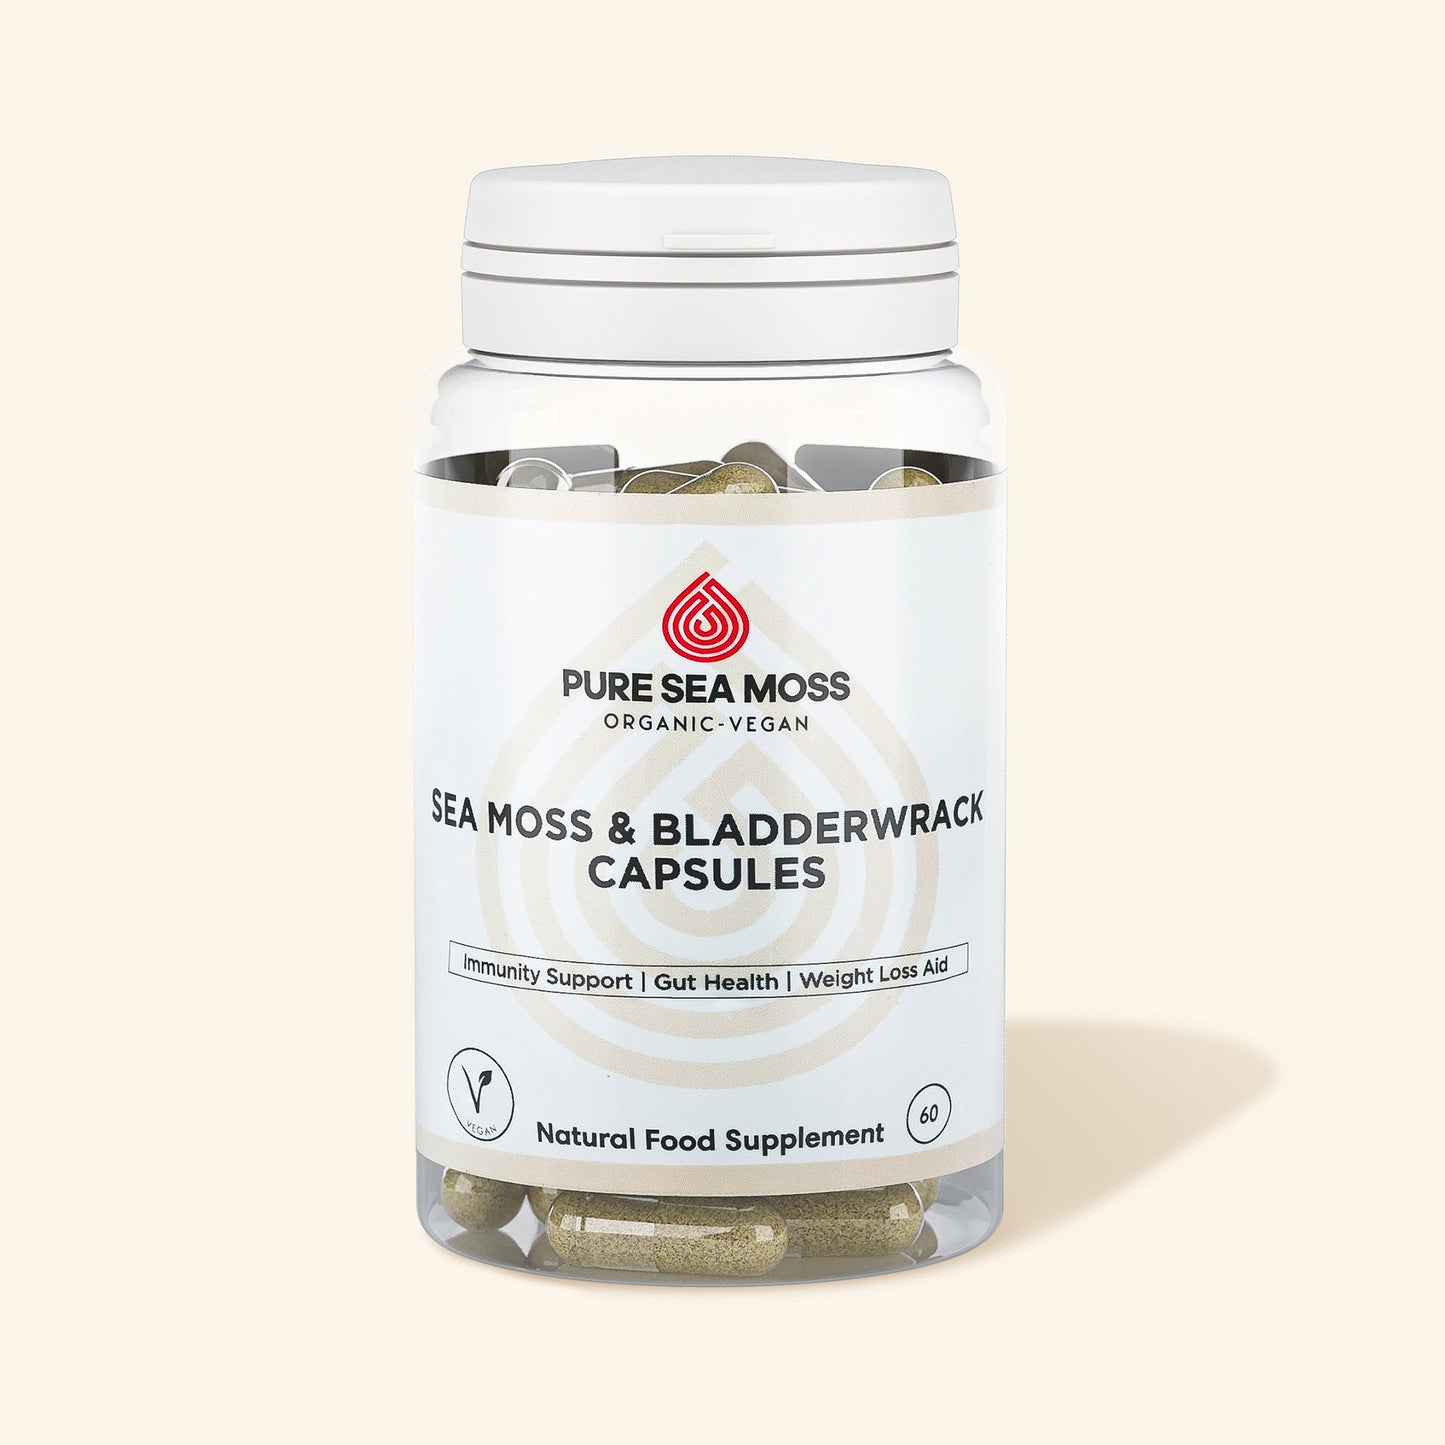 Sea moss and bladderwrack capsules by pure sea moss uk